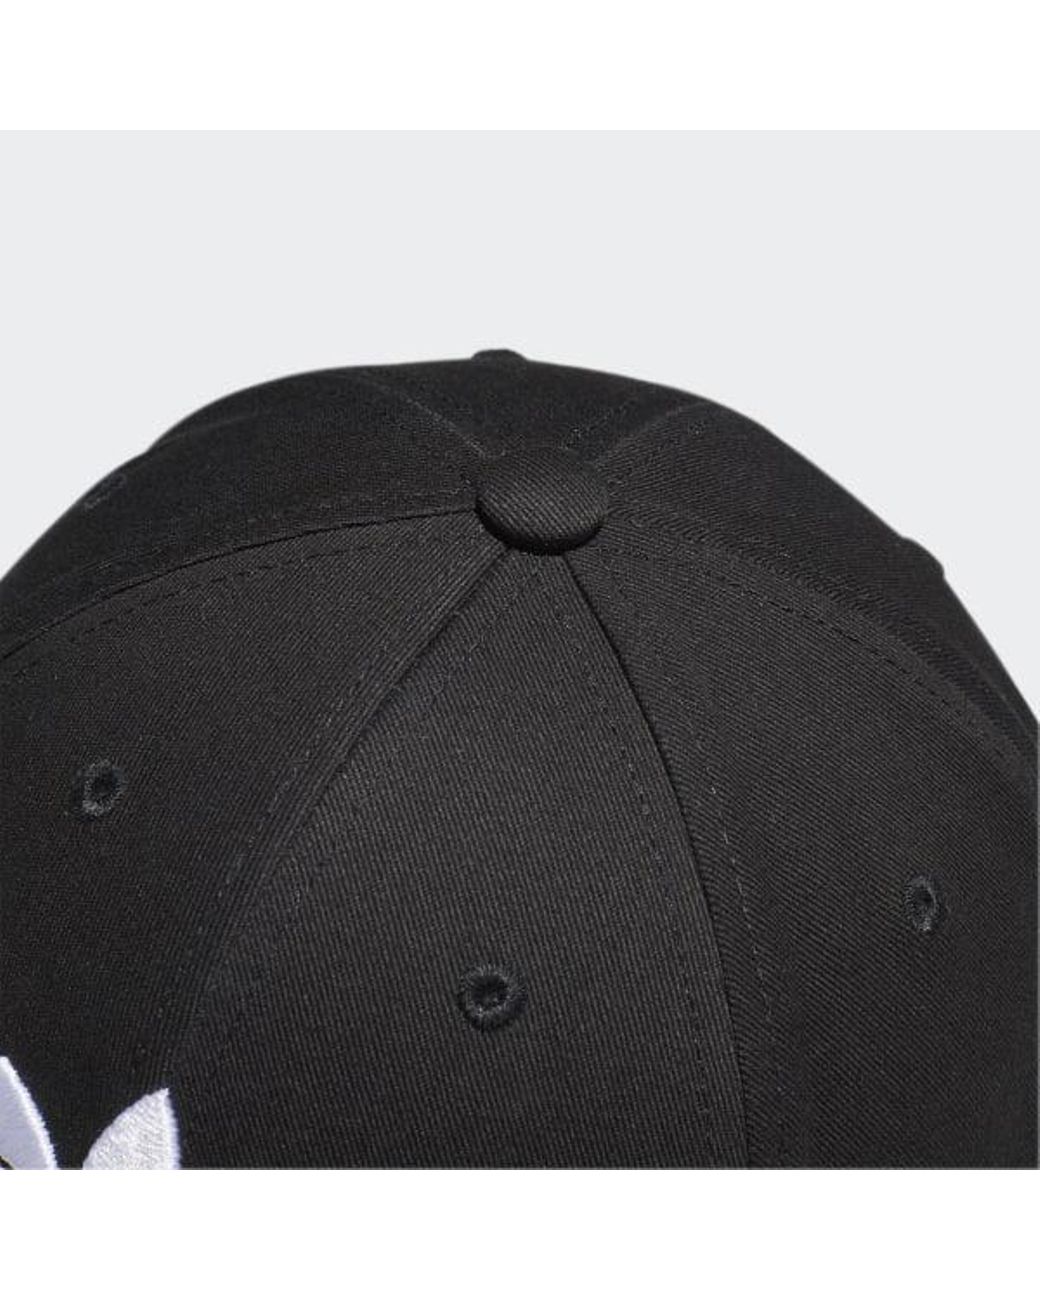 adidas trefoil baseball cap black